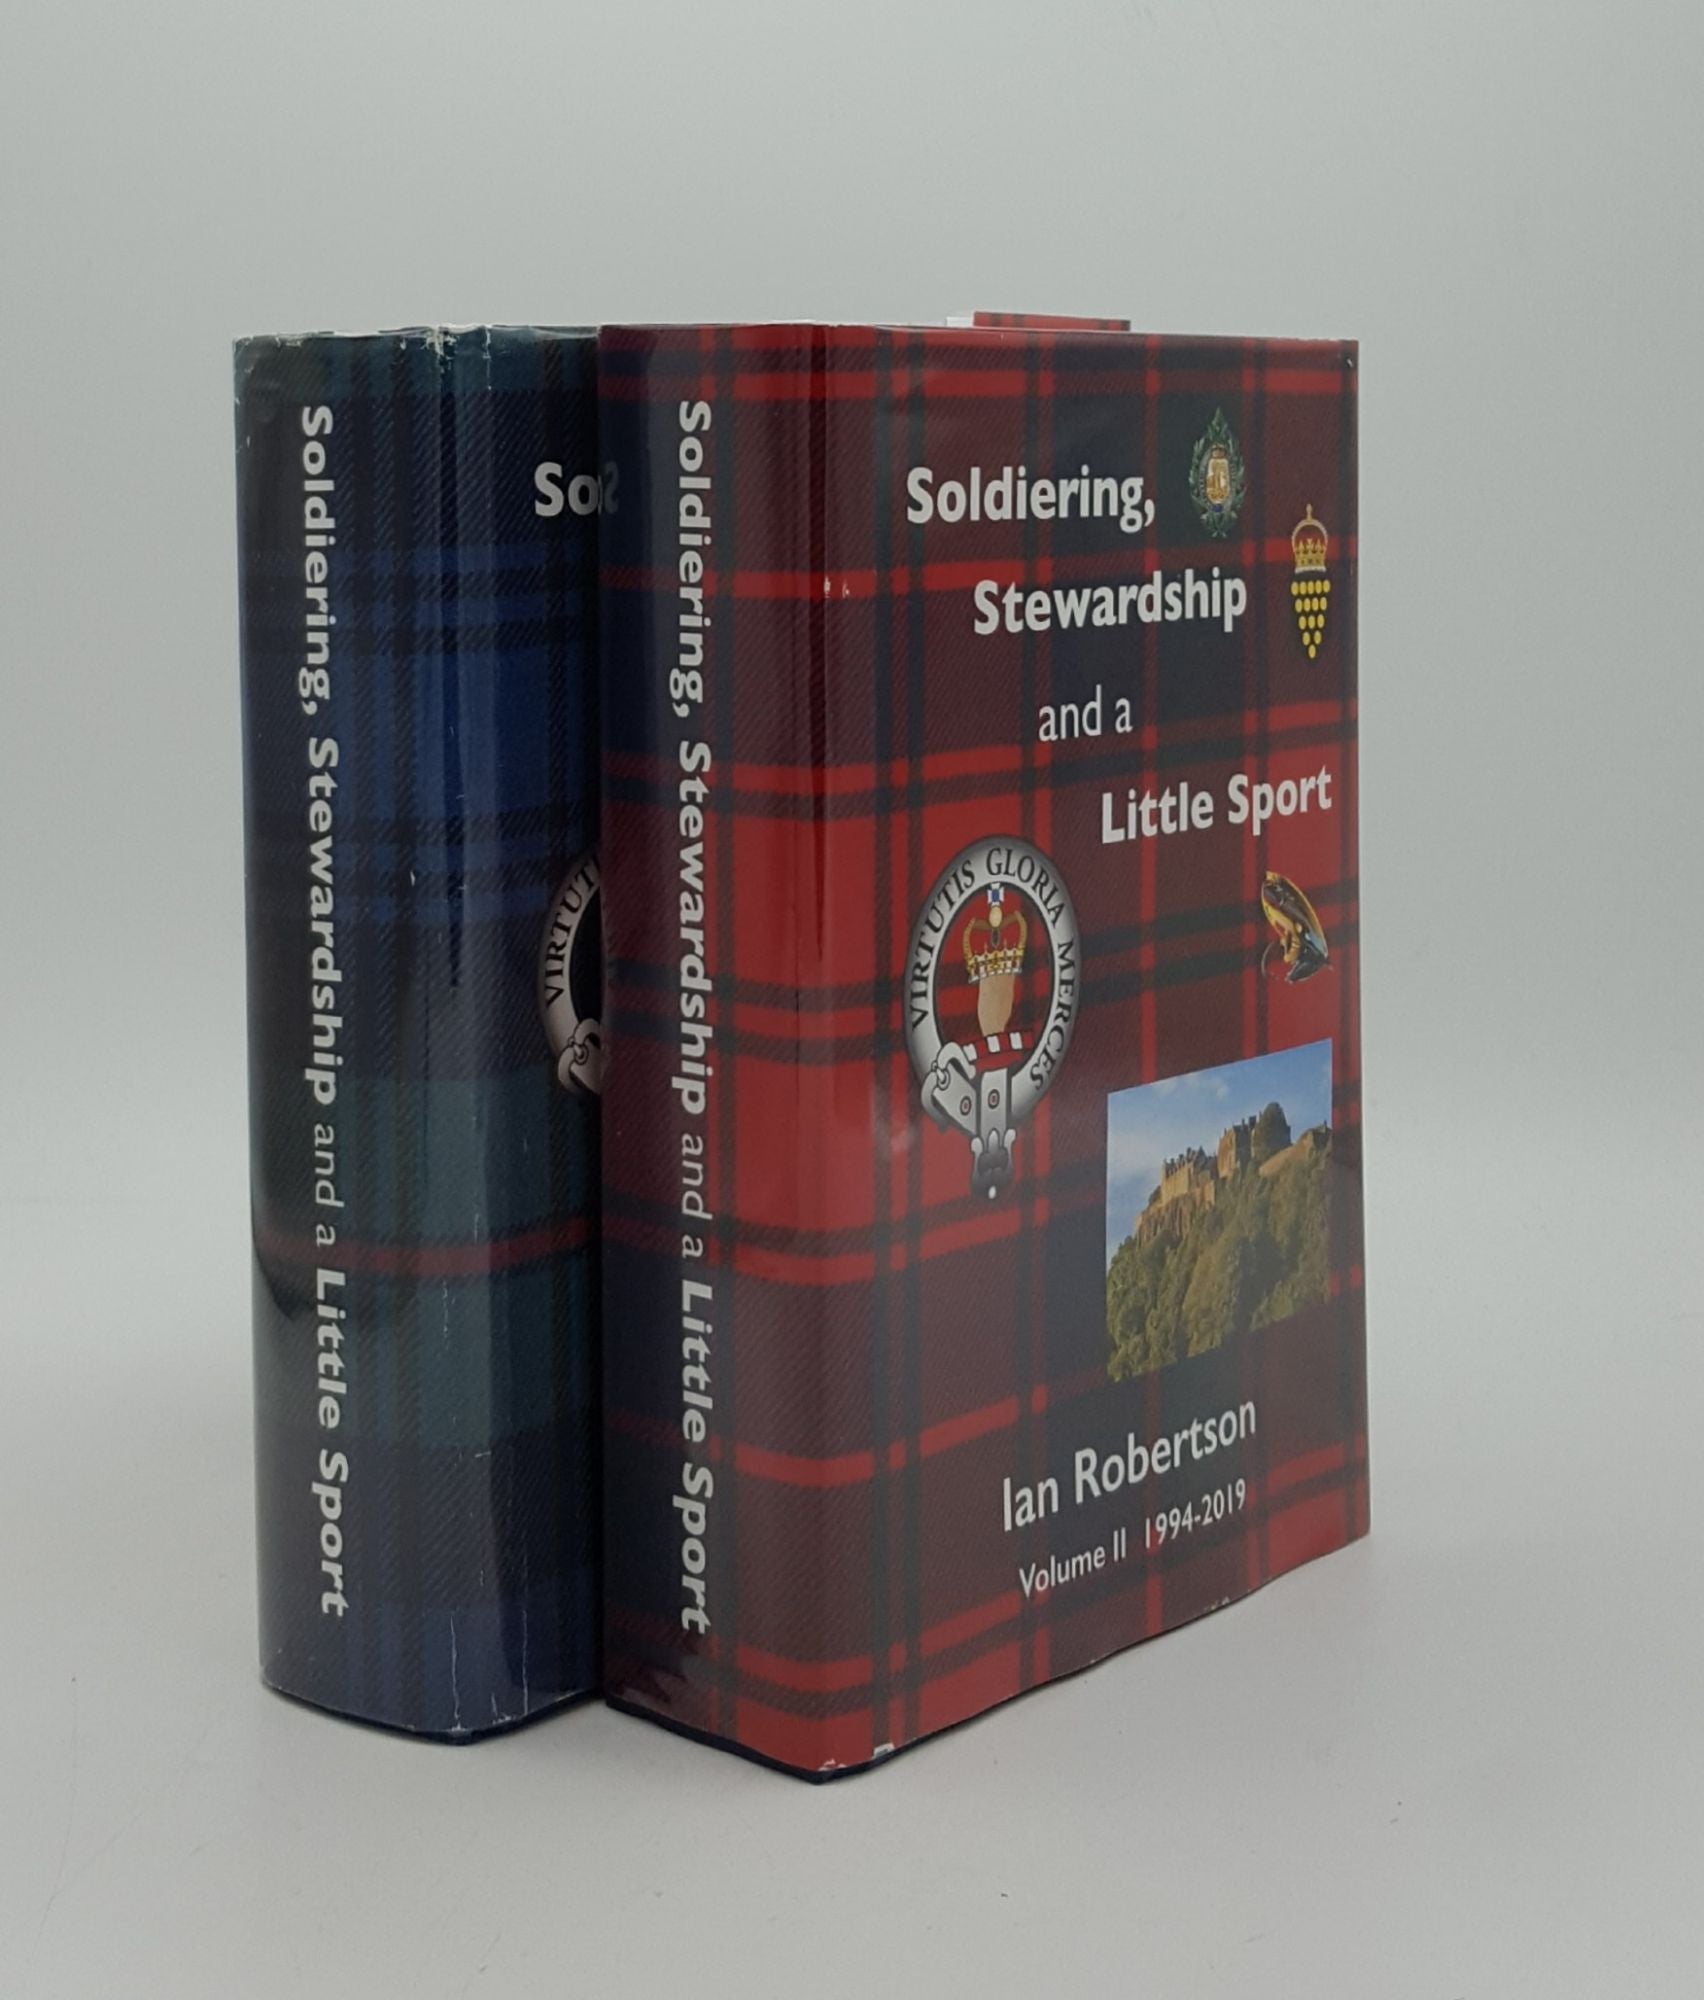 ROBERTSON Ian - Soldiering Stewardship and a Little Sport Volume I 1932-1993 [&] Volume II 1994-2019